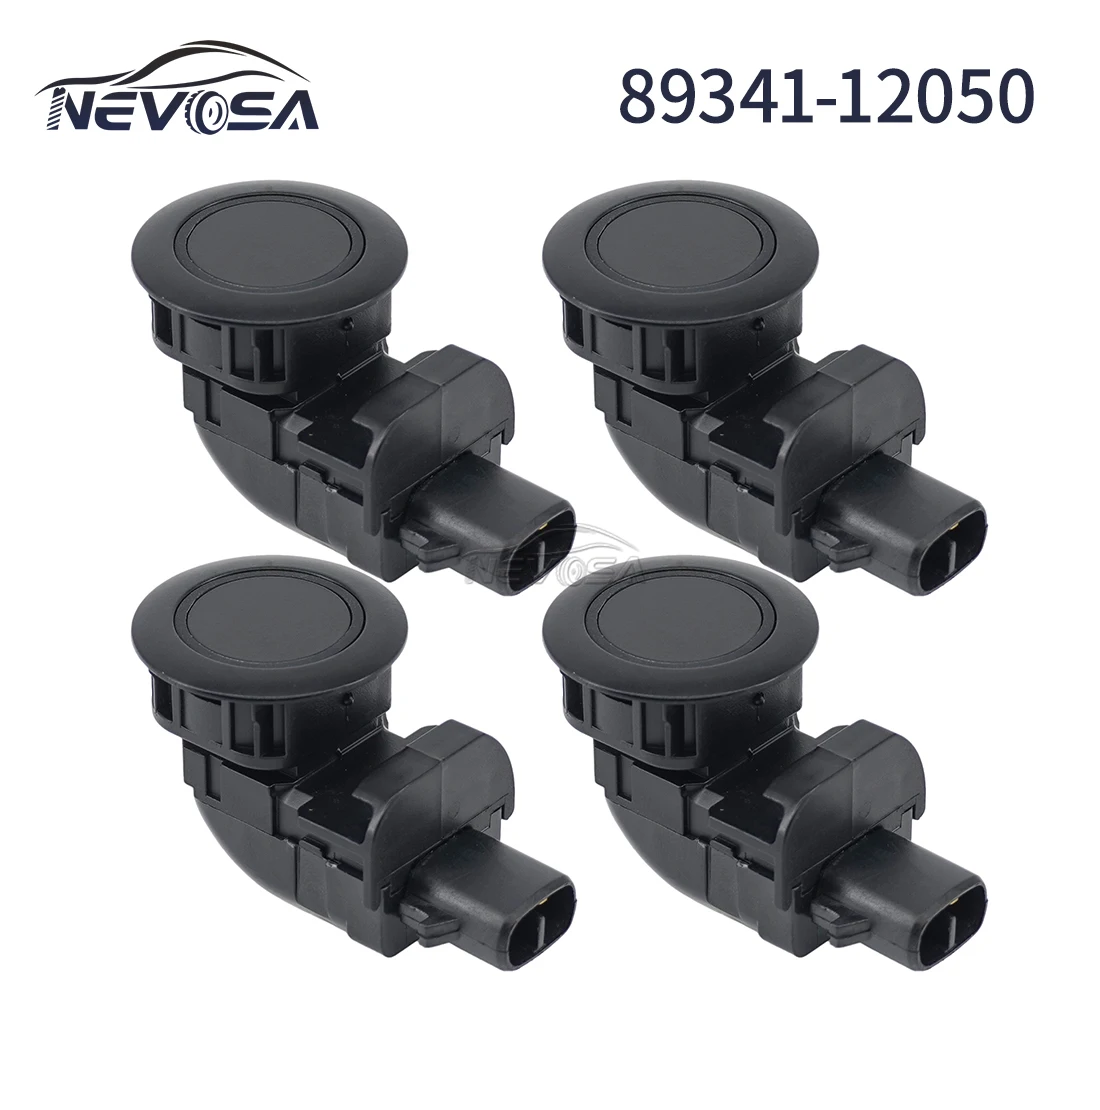 

NEVOSA 89341-12050 4PCS 1PC PDC Parking Sensor Rear Ultrasonic Reverse Radar For Toyota Corolla NZE120 ZZE12 Cruiser Camry ACV30